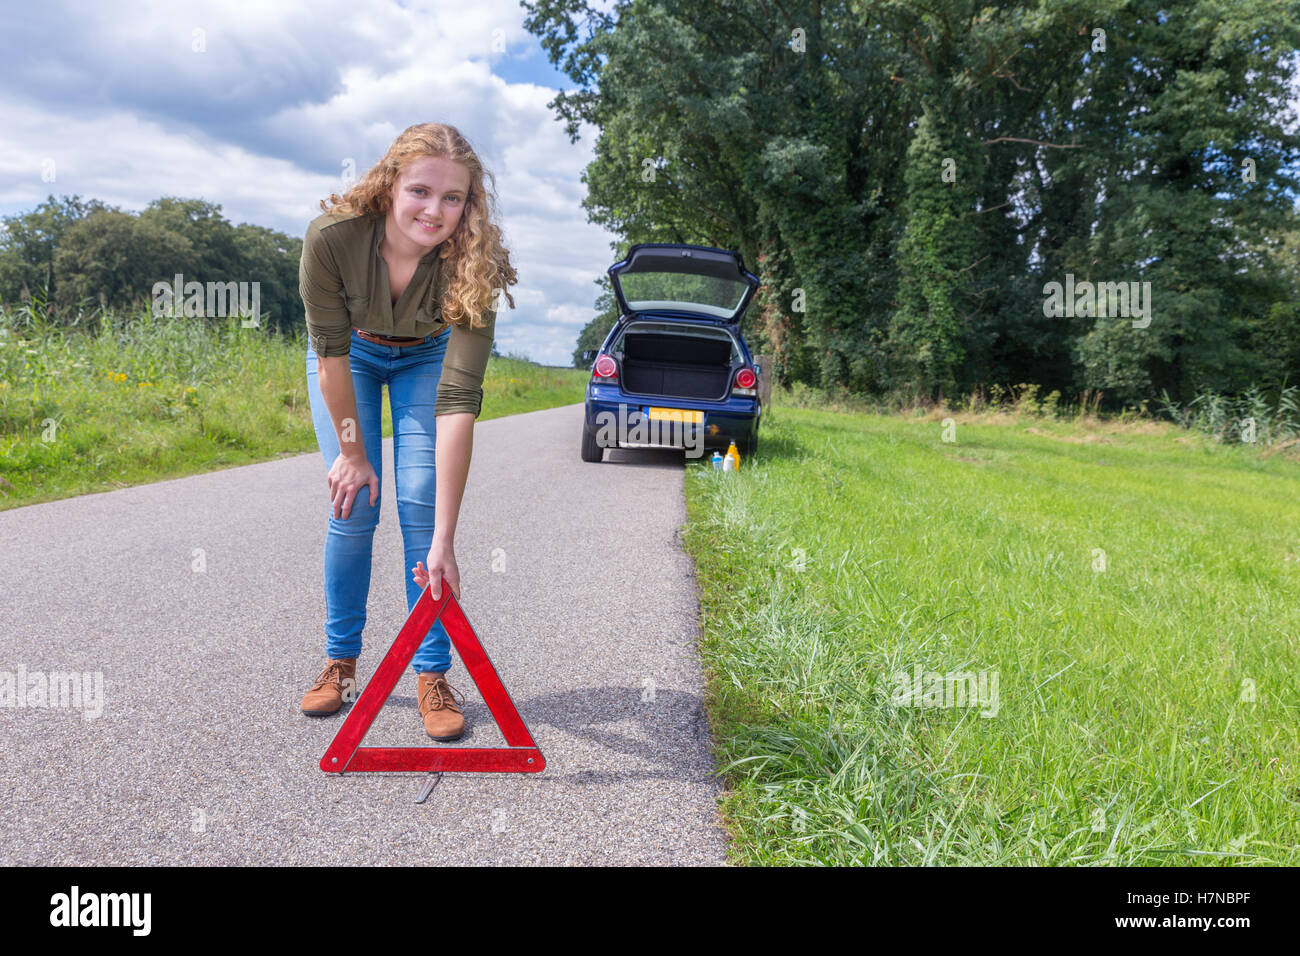 European woman placing hazard warning triangle on rural road Stock Photo